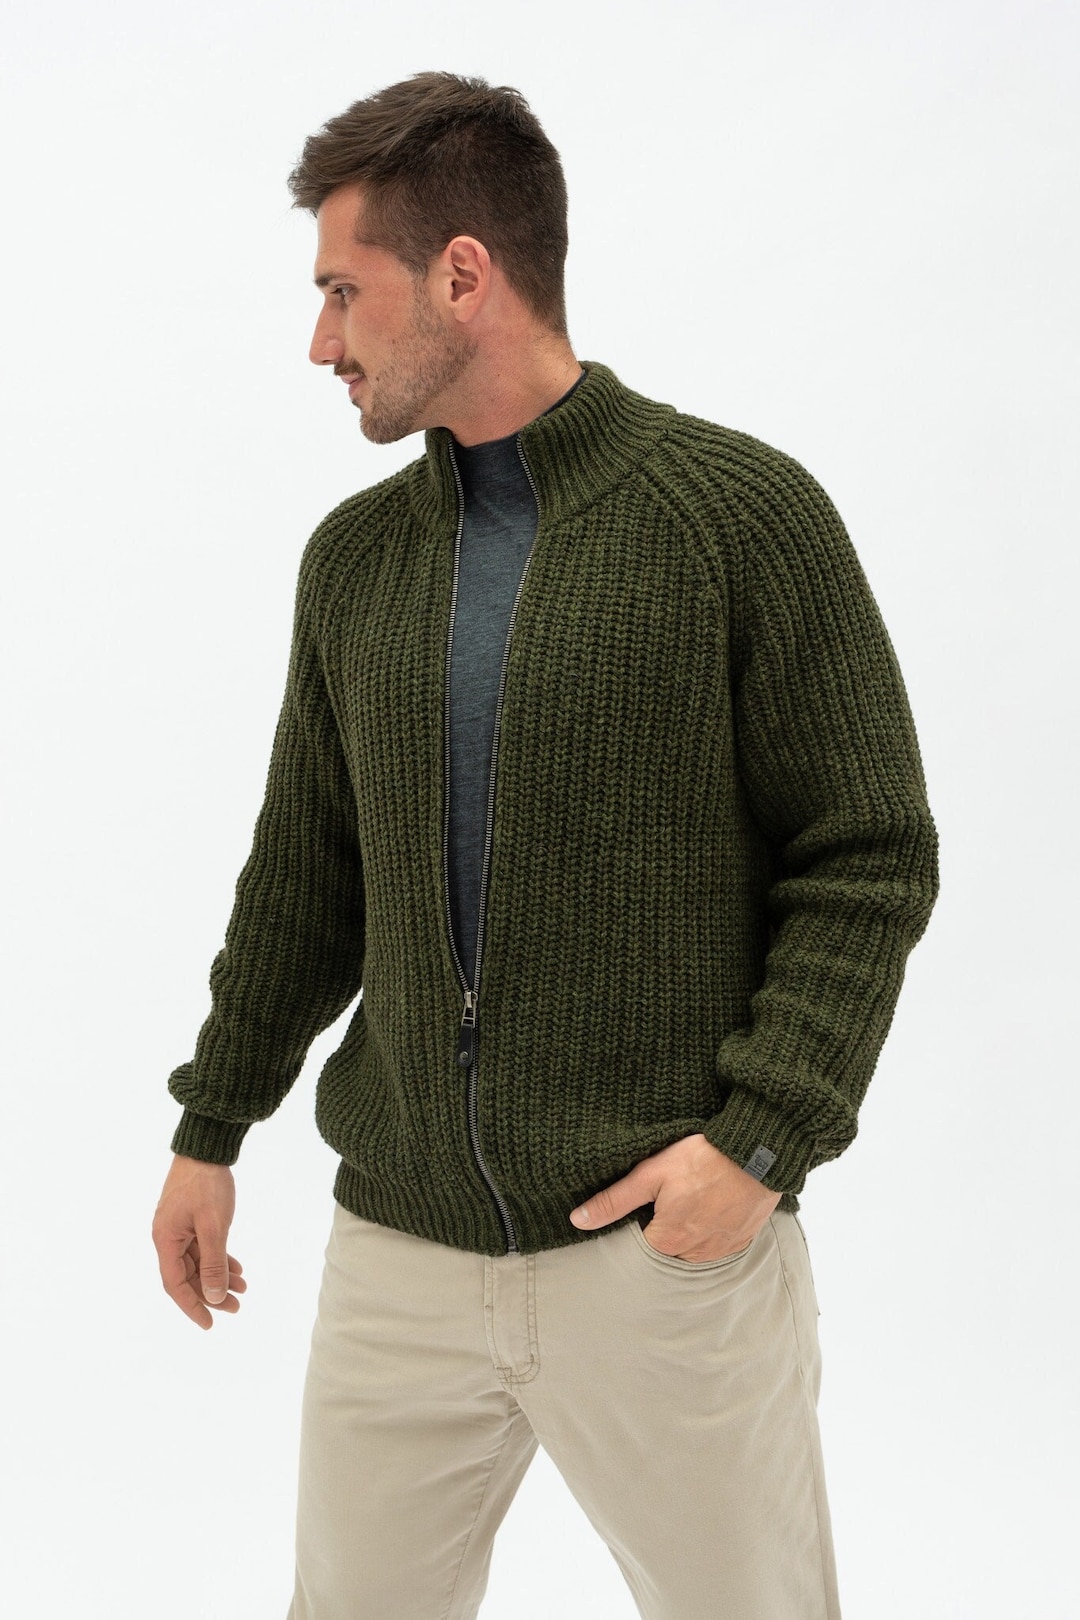 Warm Merino Wool Jumper, Men's Sweater With Zip, Minimalist Khaki ...